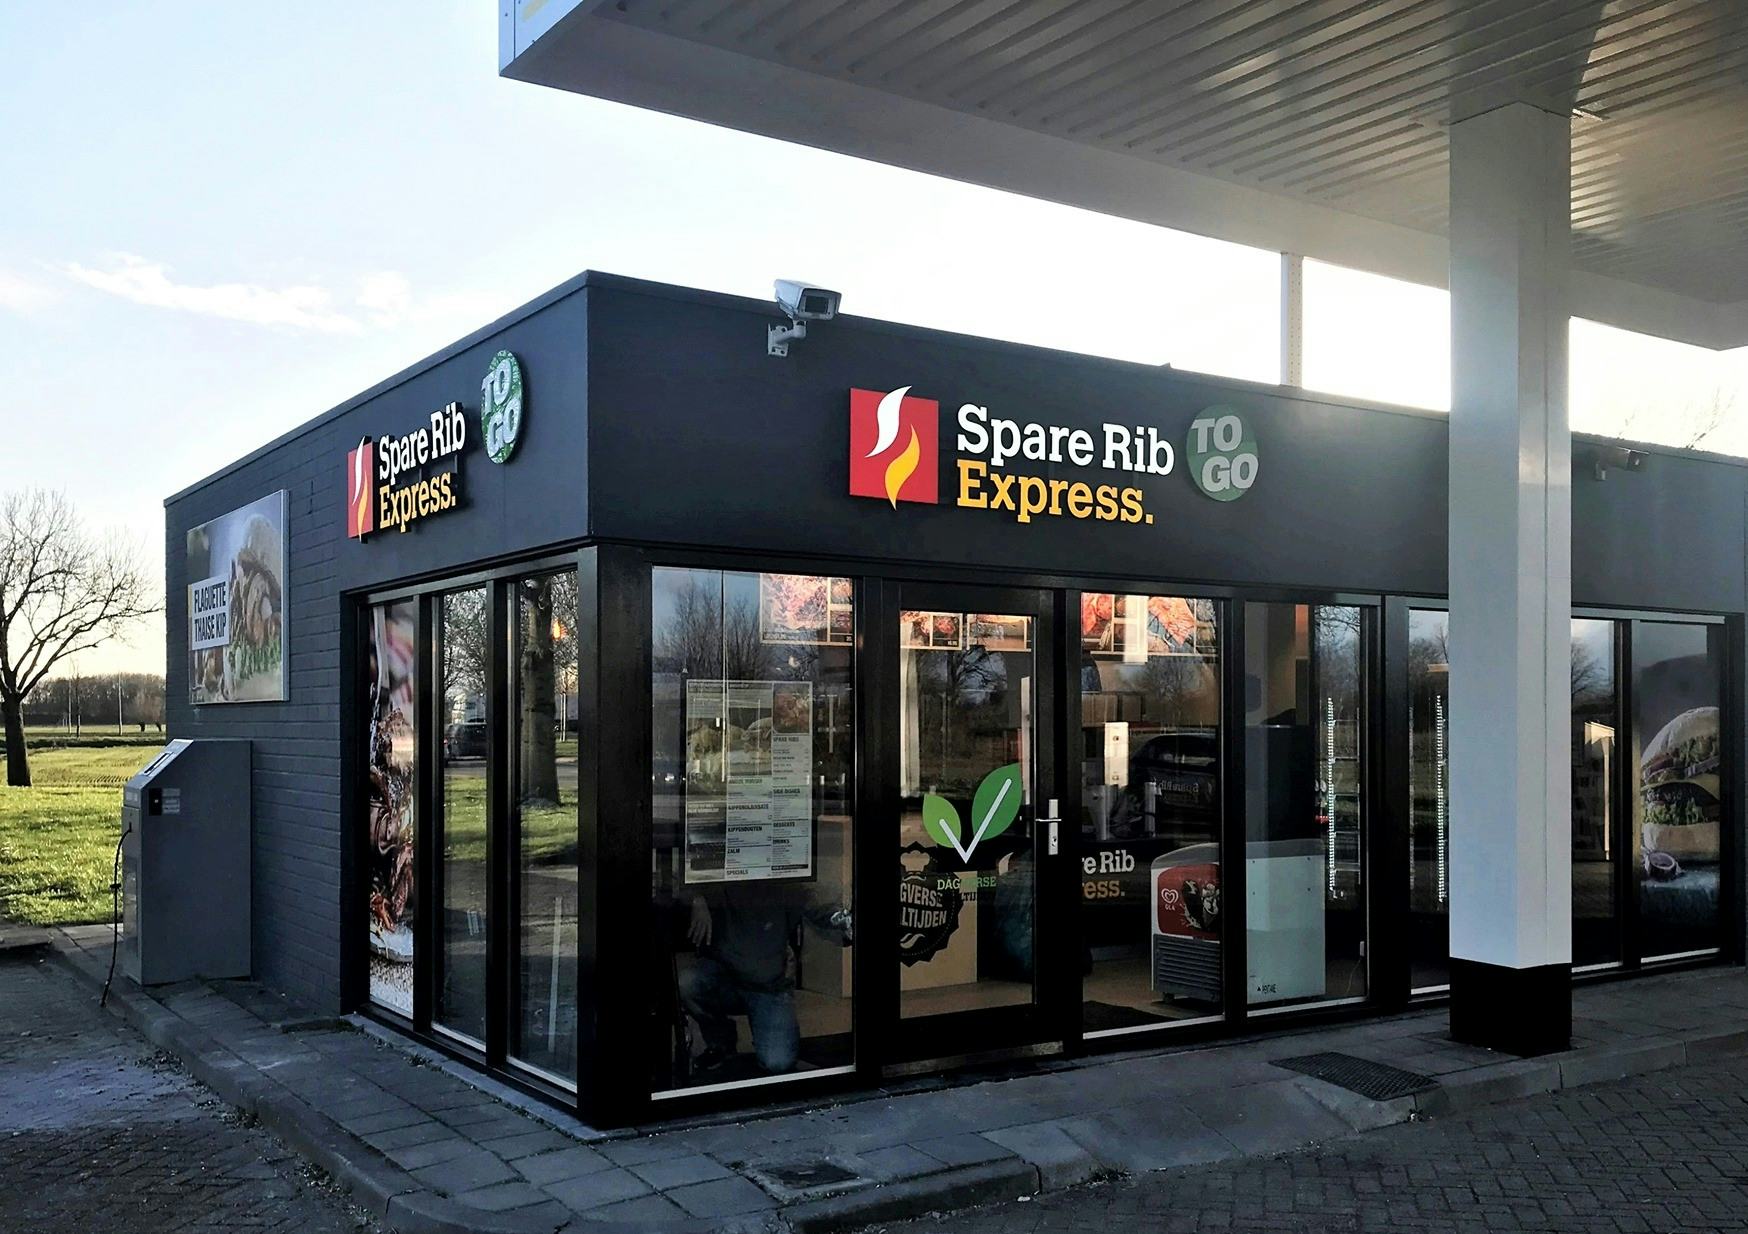 Spare Rib Express to go in Doetinchem